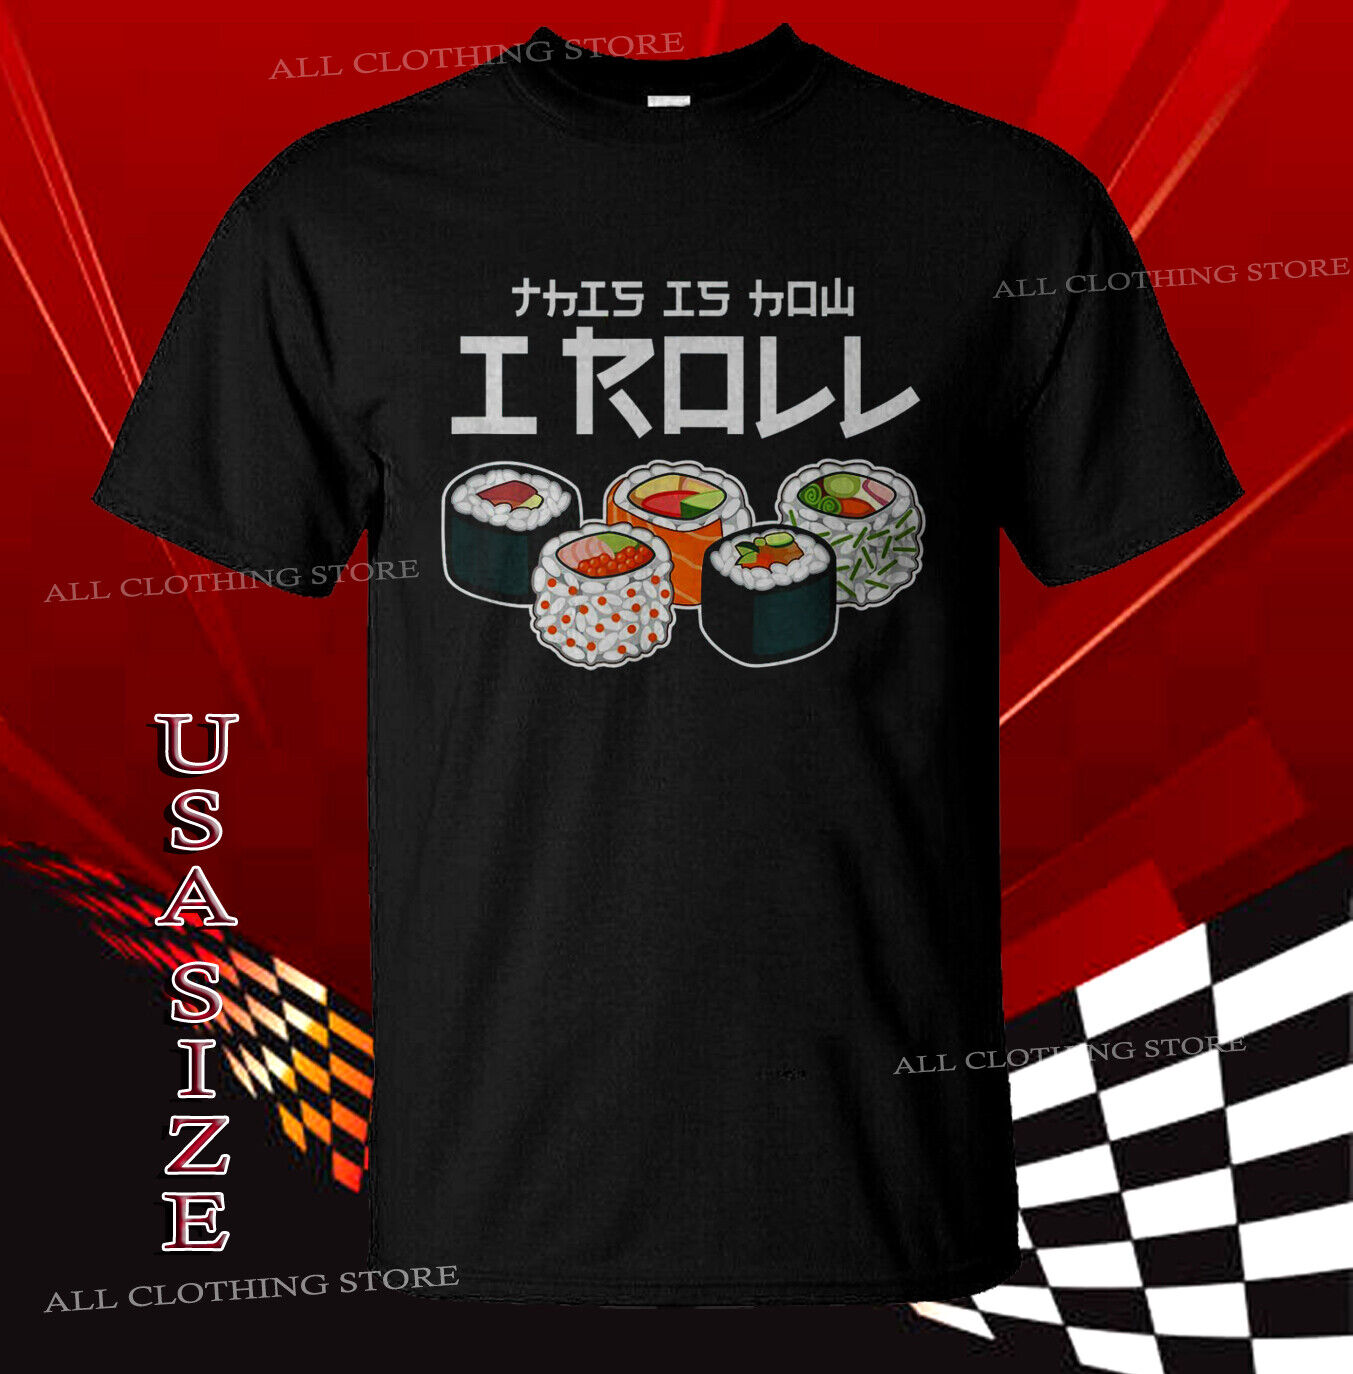 New Shirt Roll Sushi Shirt Japanese Anime Food T-Shirt Usa Size S-5XL | eBay